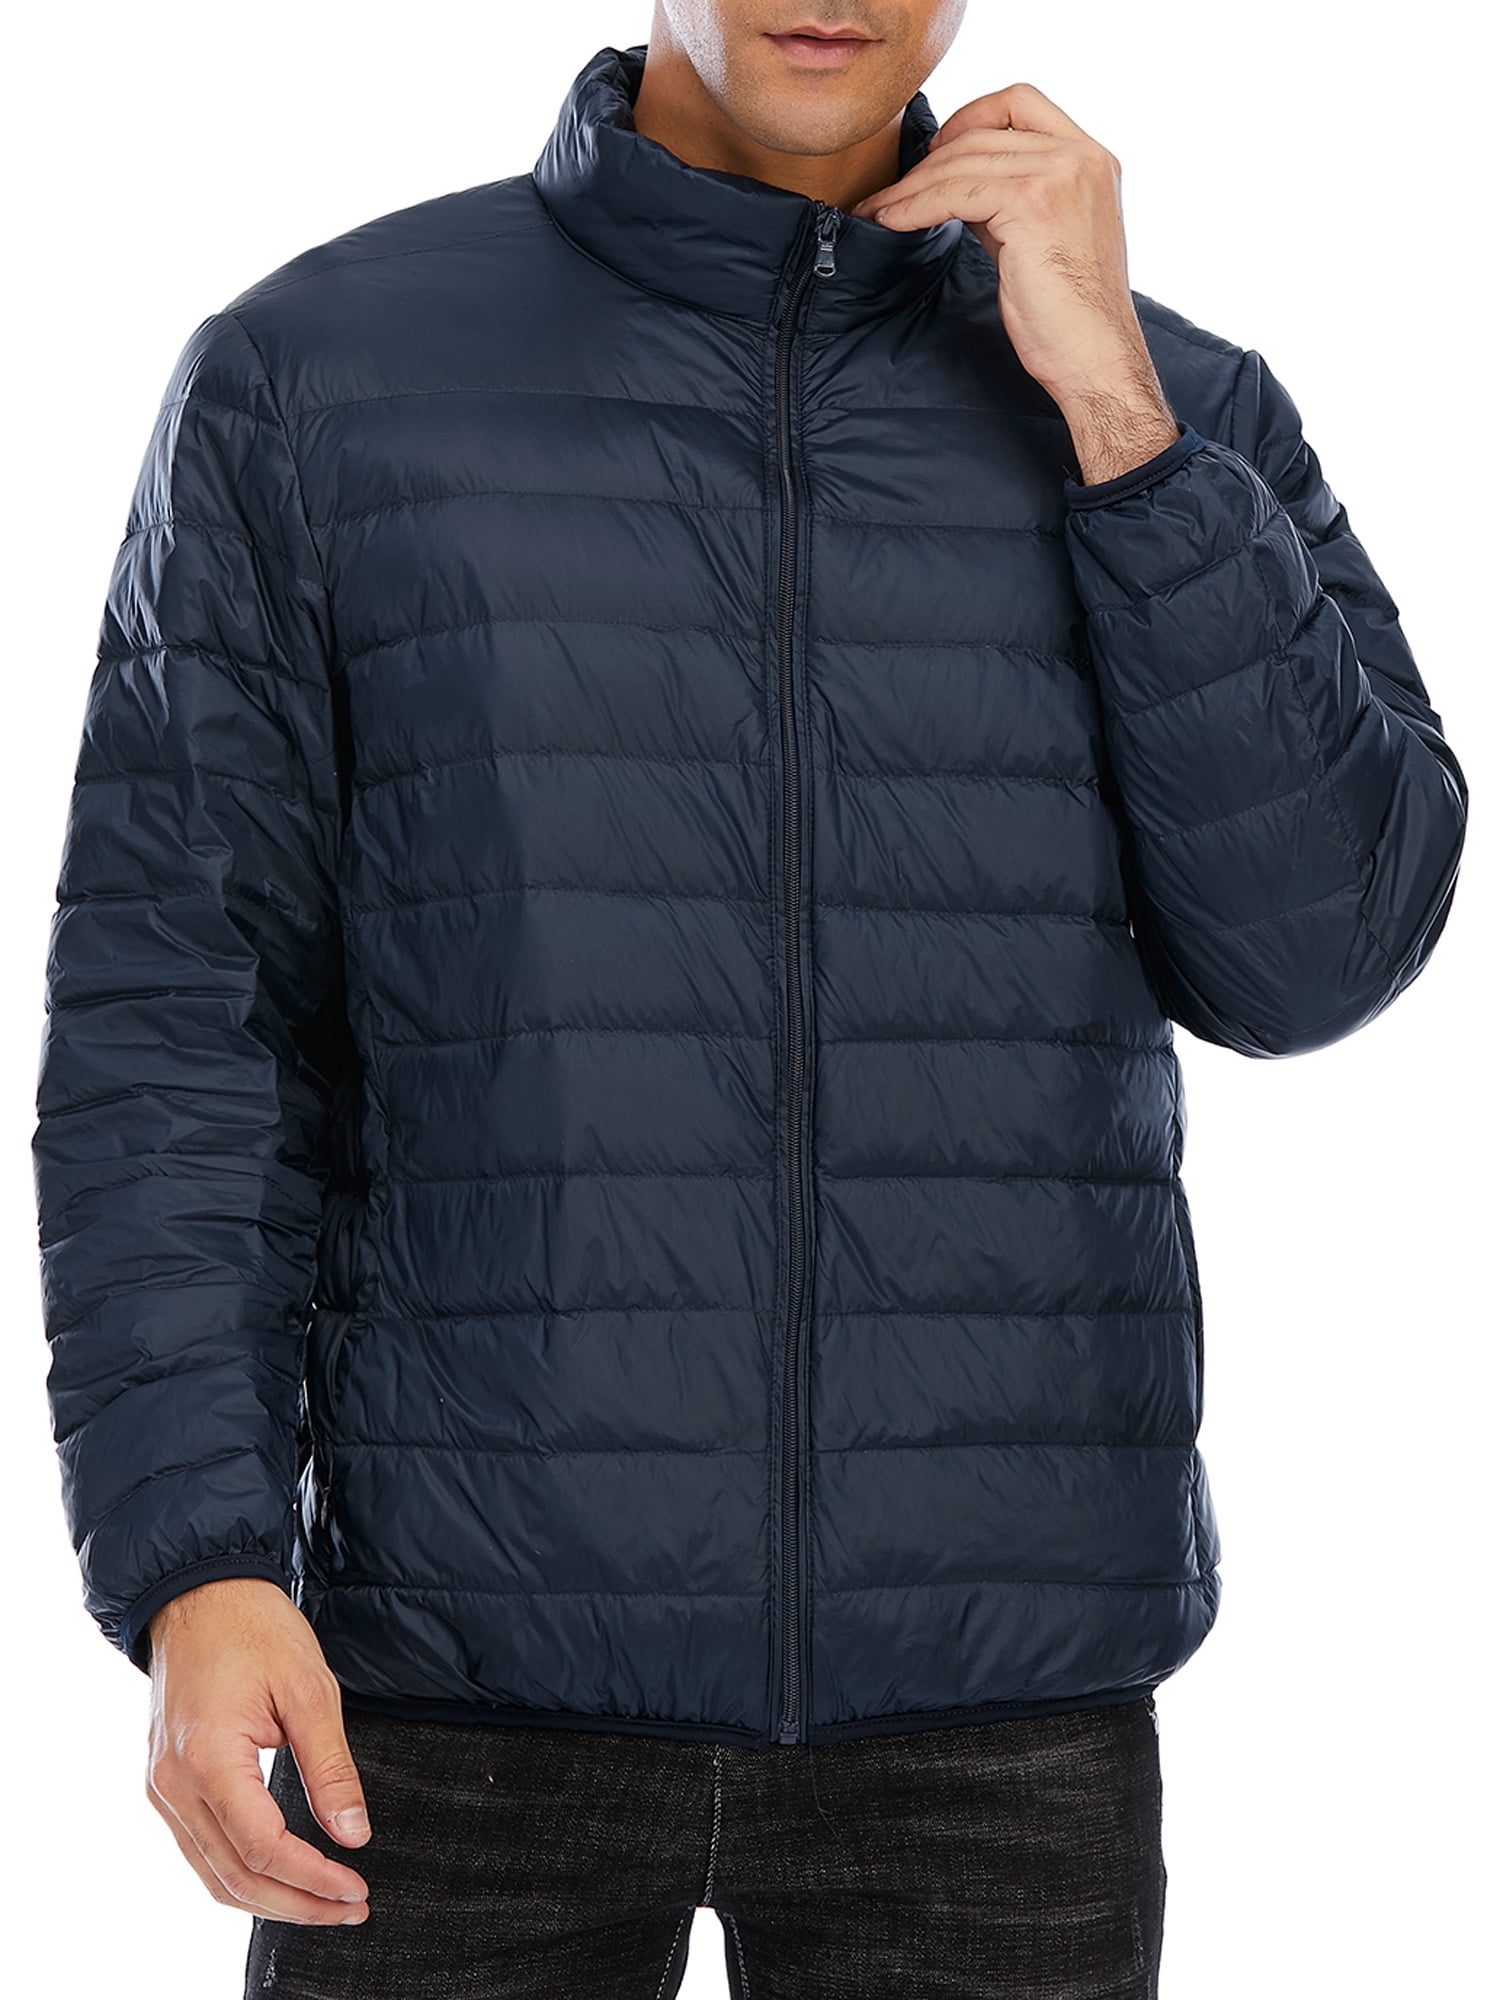 Men/'s Down Alternative Lightweight Puffer Jacket Winter Warm Coat Padded Insulated Quilted Zip-Off Hood